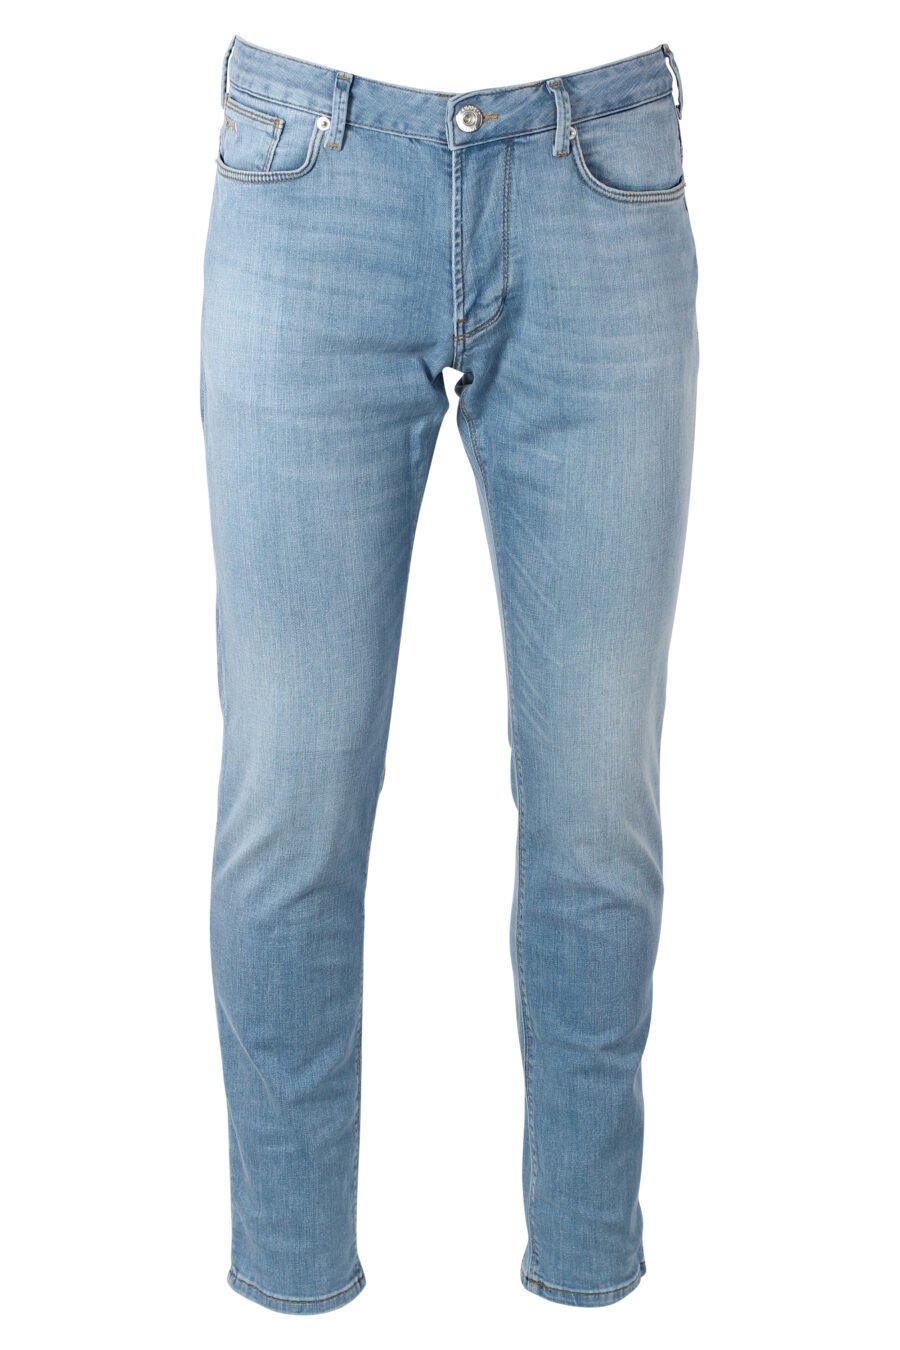 Pantalon en denim bleu clair avec mini logo en métal - IMG 9931